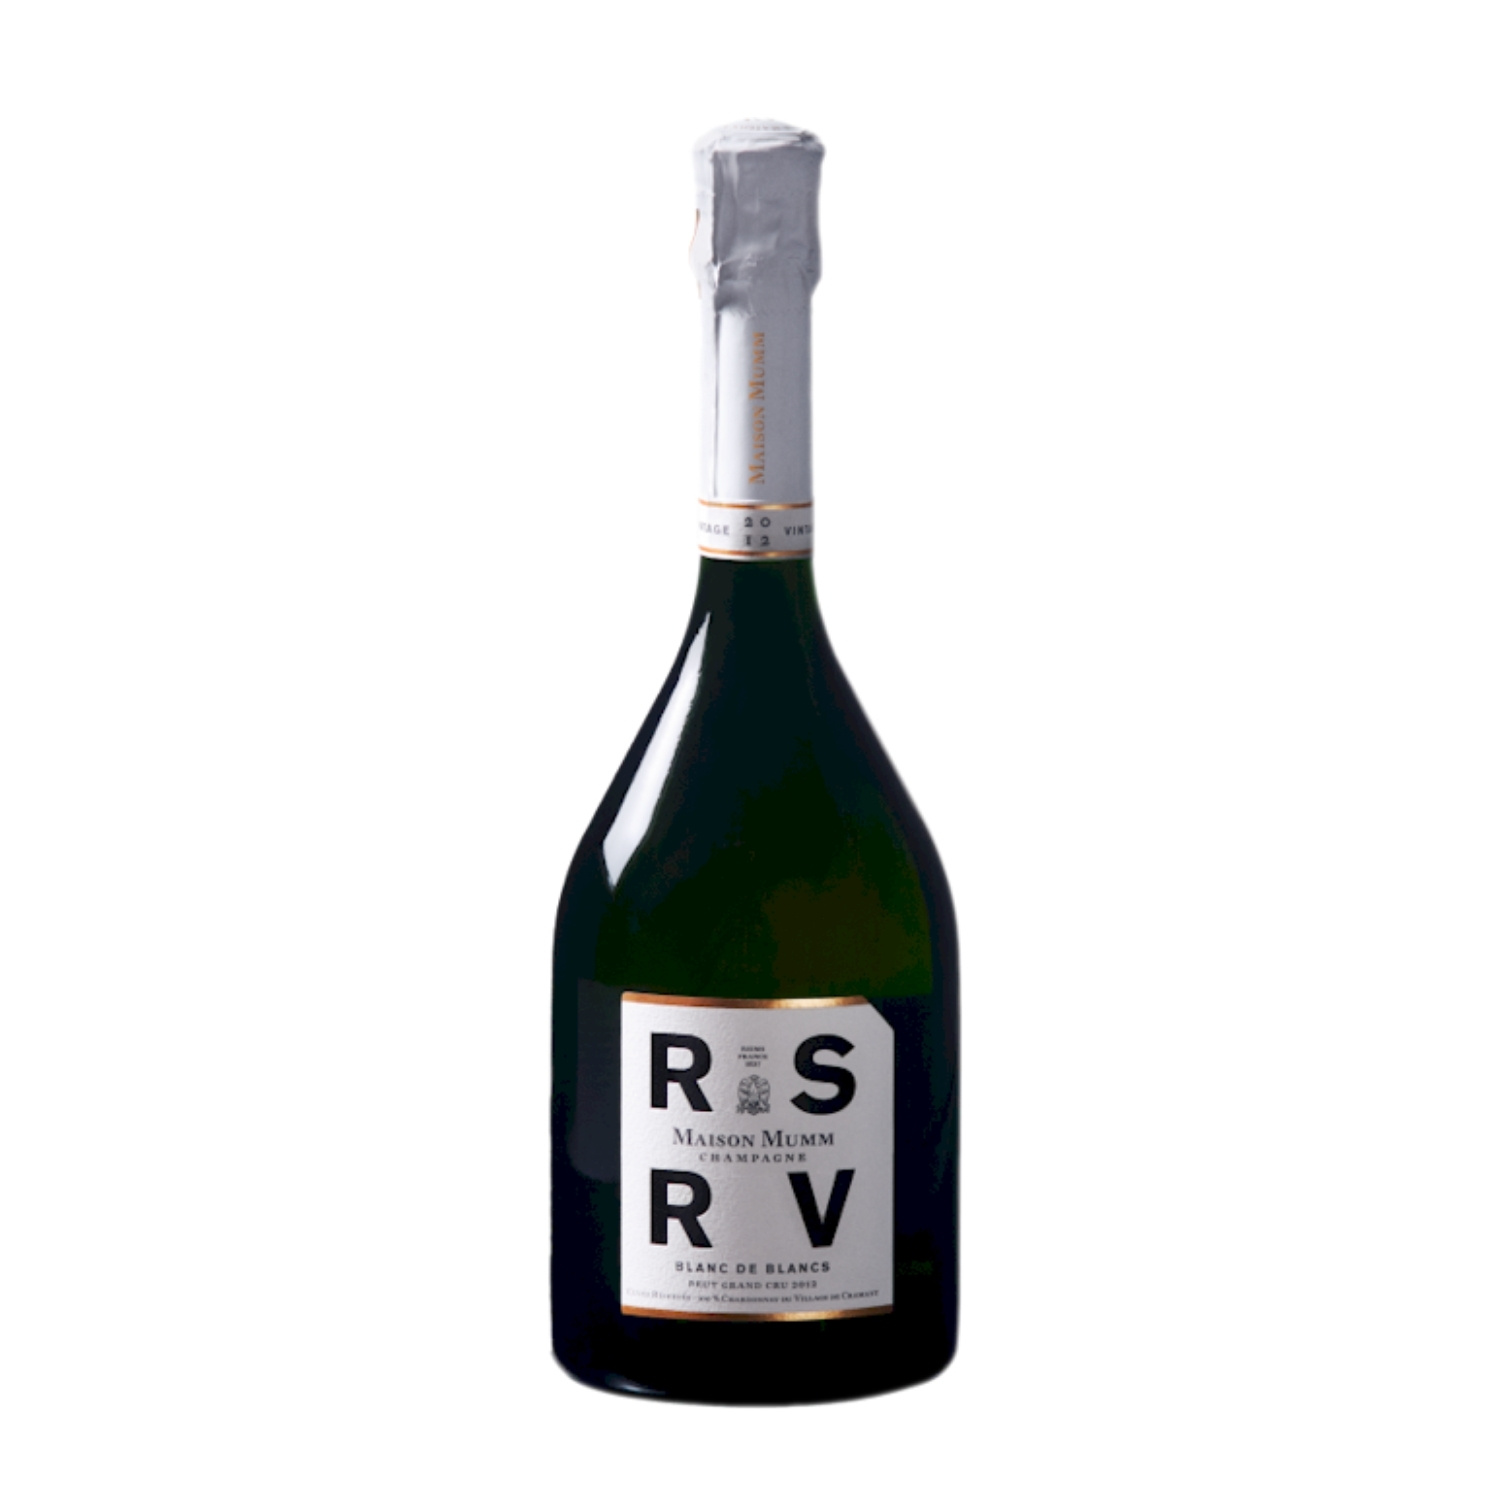 Champagne Mumm RSRV Blanc de blanc naked